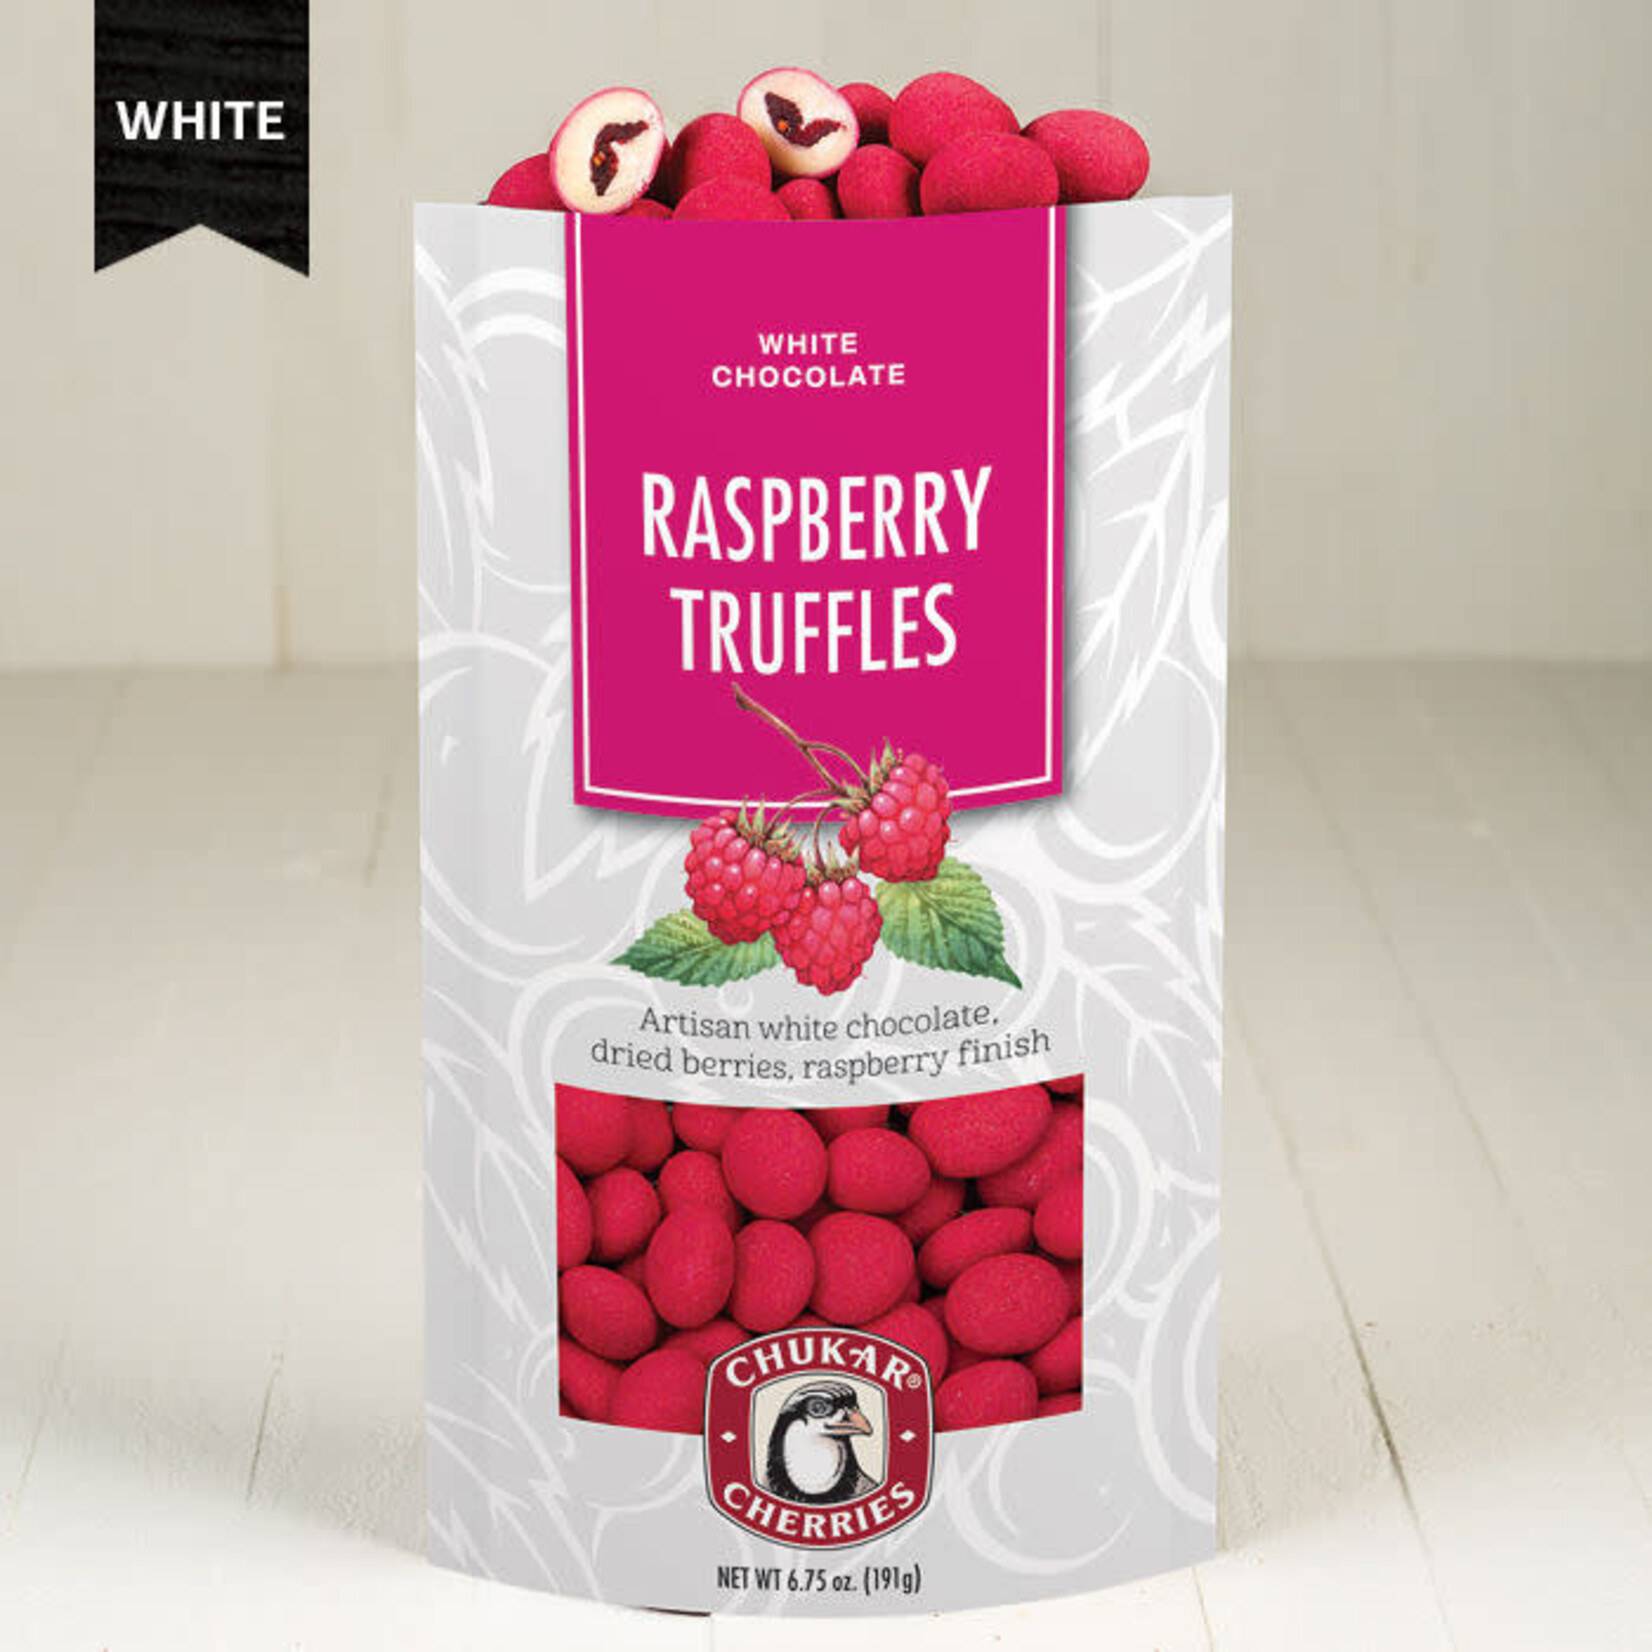 Chukar Cherry Company Raspberry Truffles - White Chocolate 6.75oz